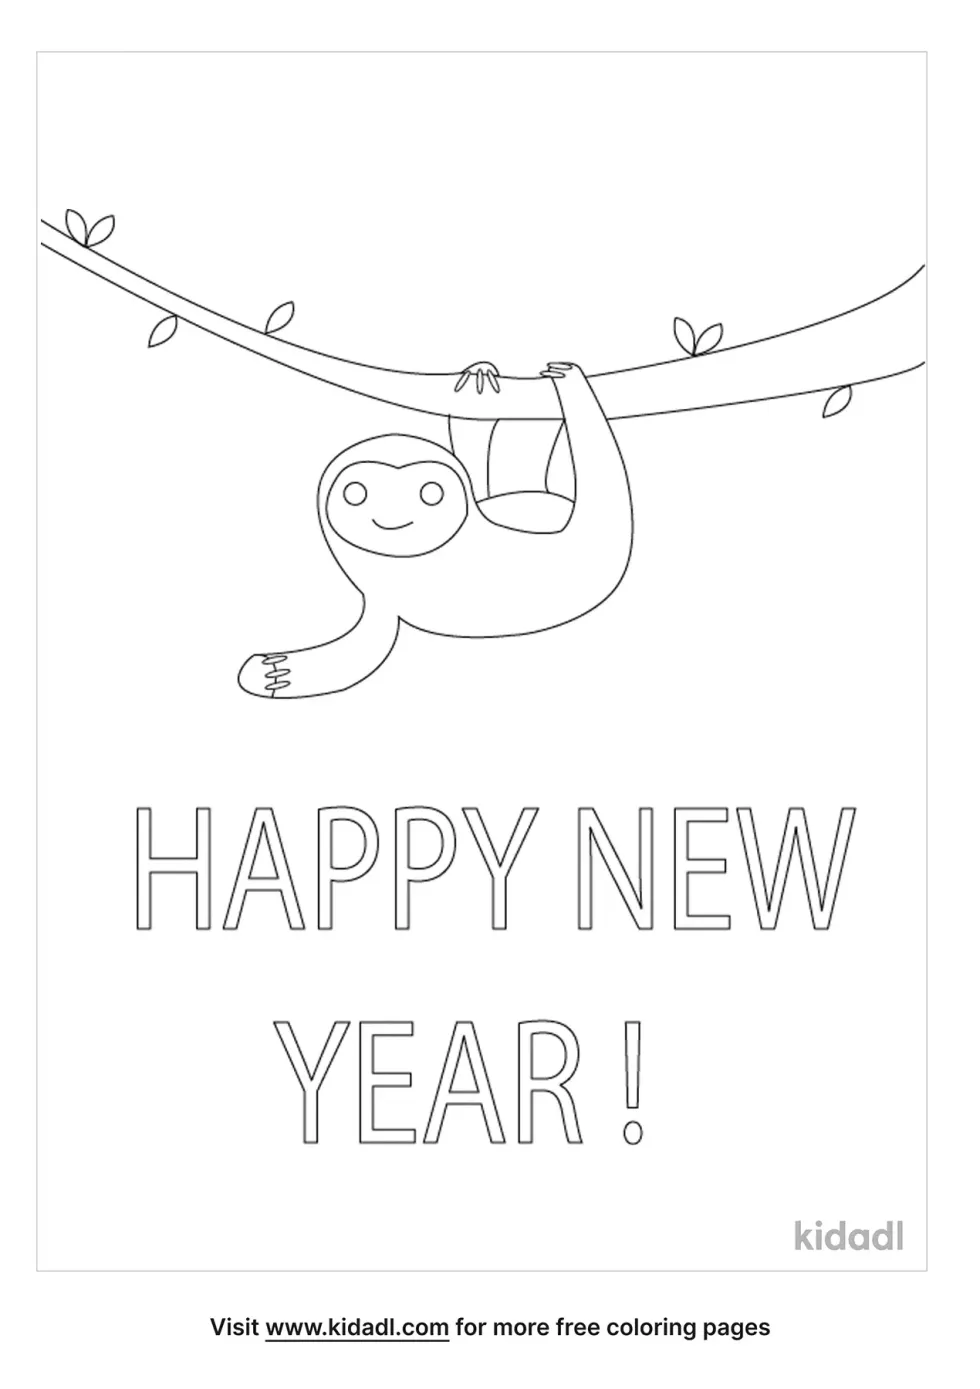 Happy New Year Sloth